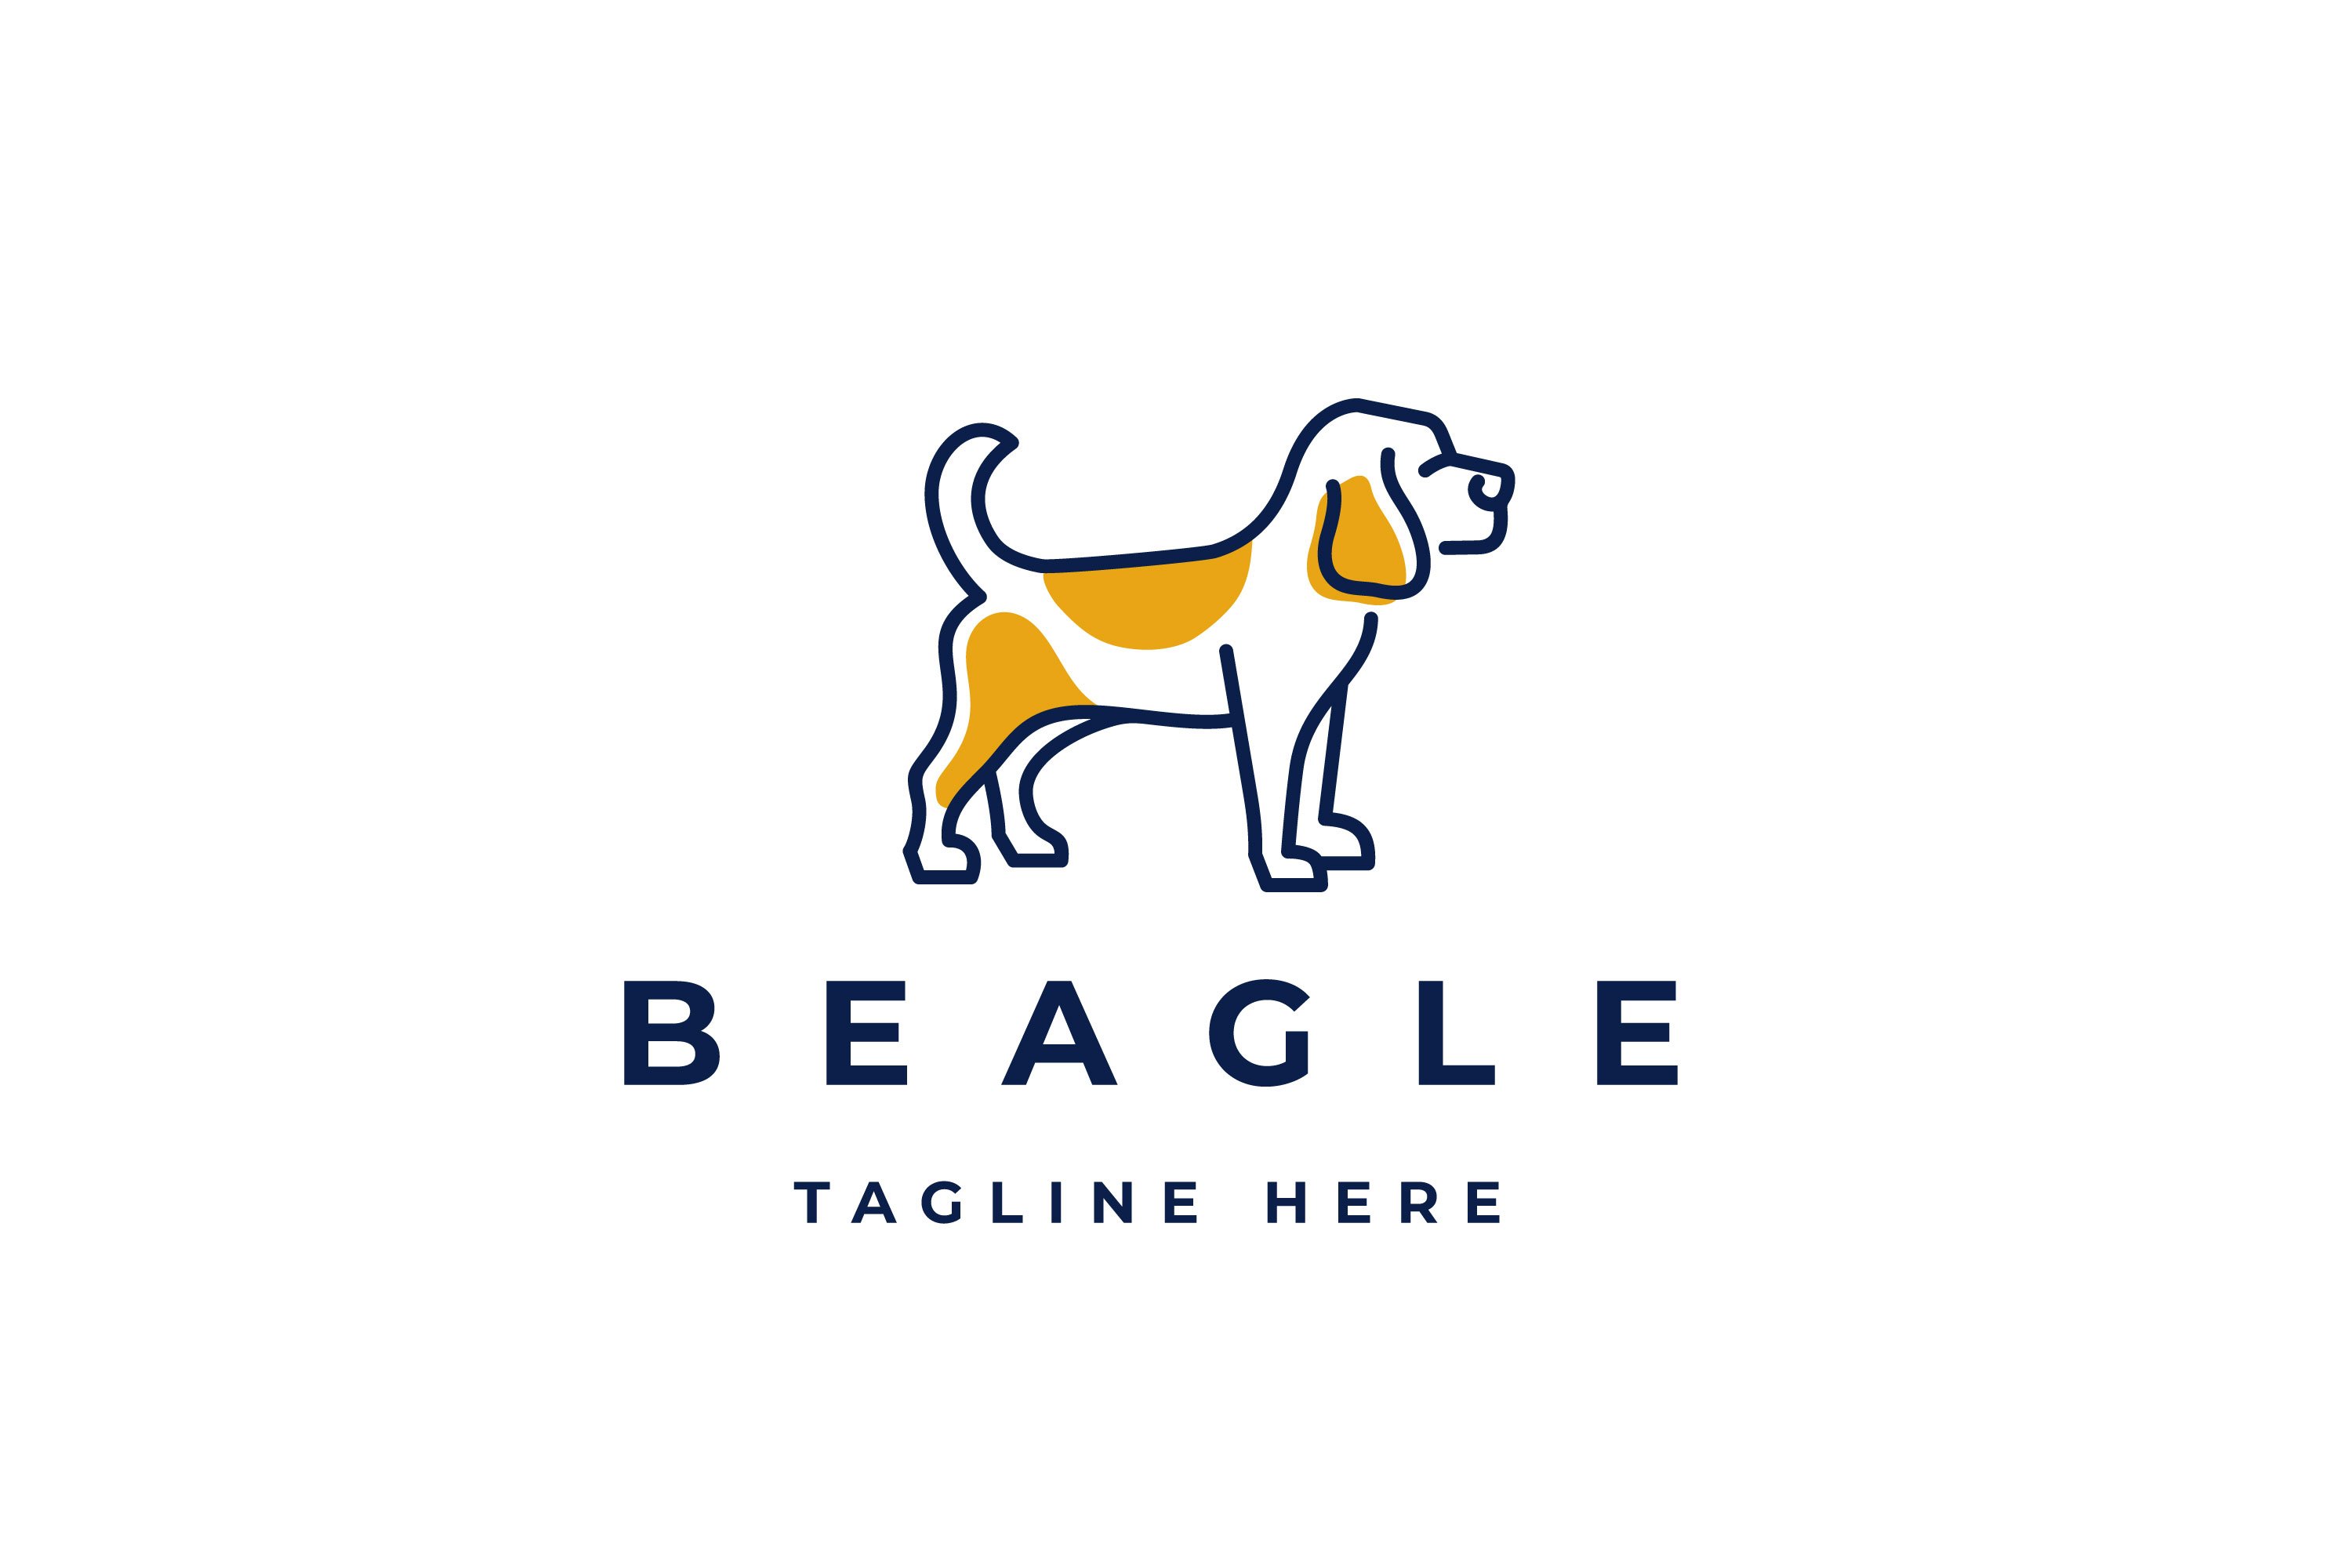 Beagle Dog Monoline Logo Design cover image.